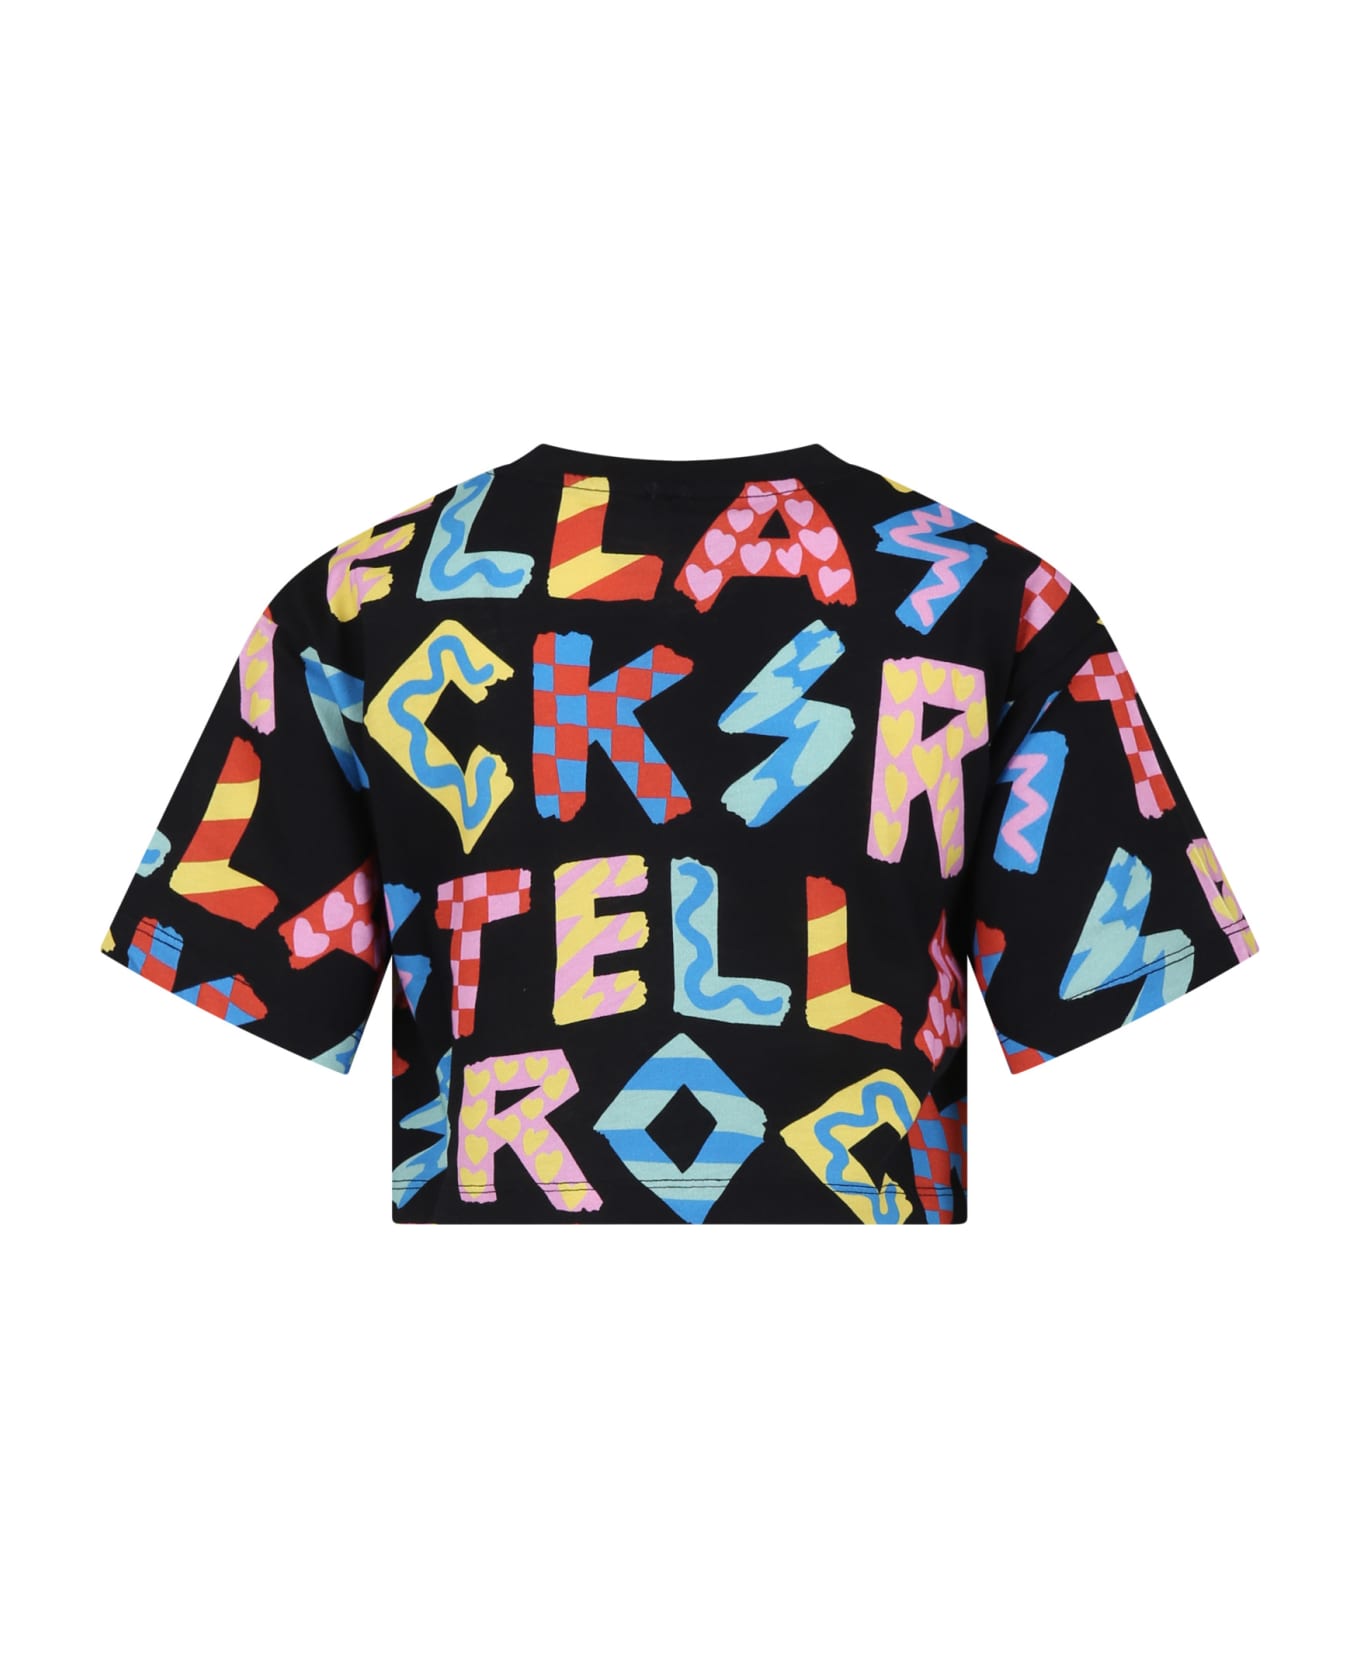 Stella McCartney Kids Black T-shirt For Girl With All-over Multicolor Print - Black